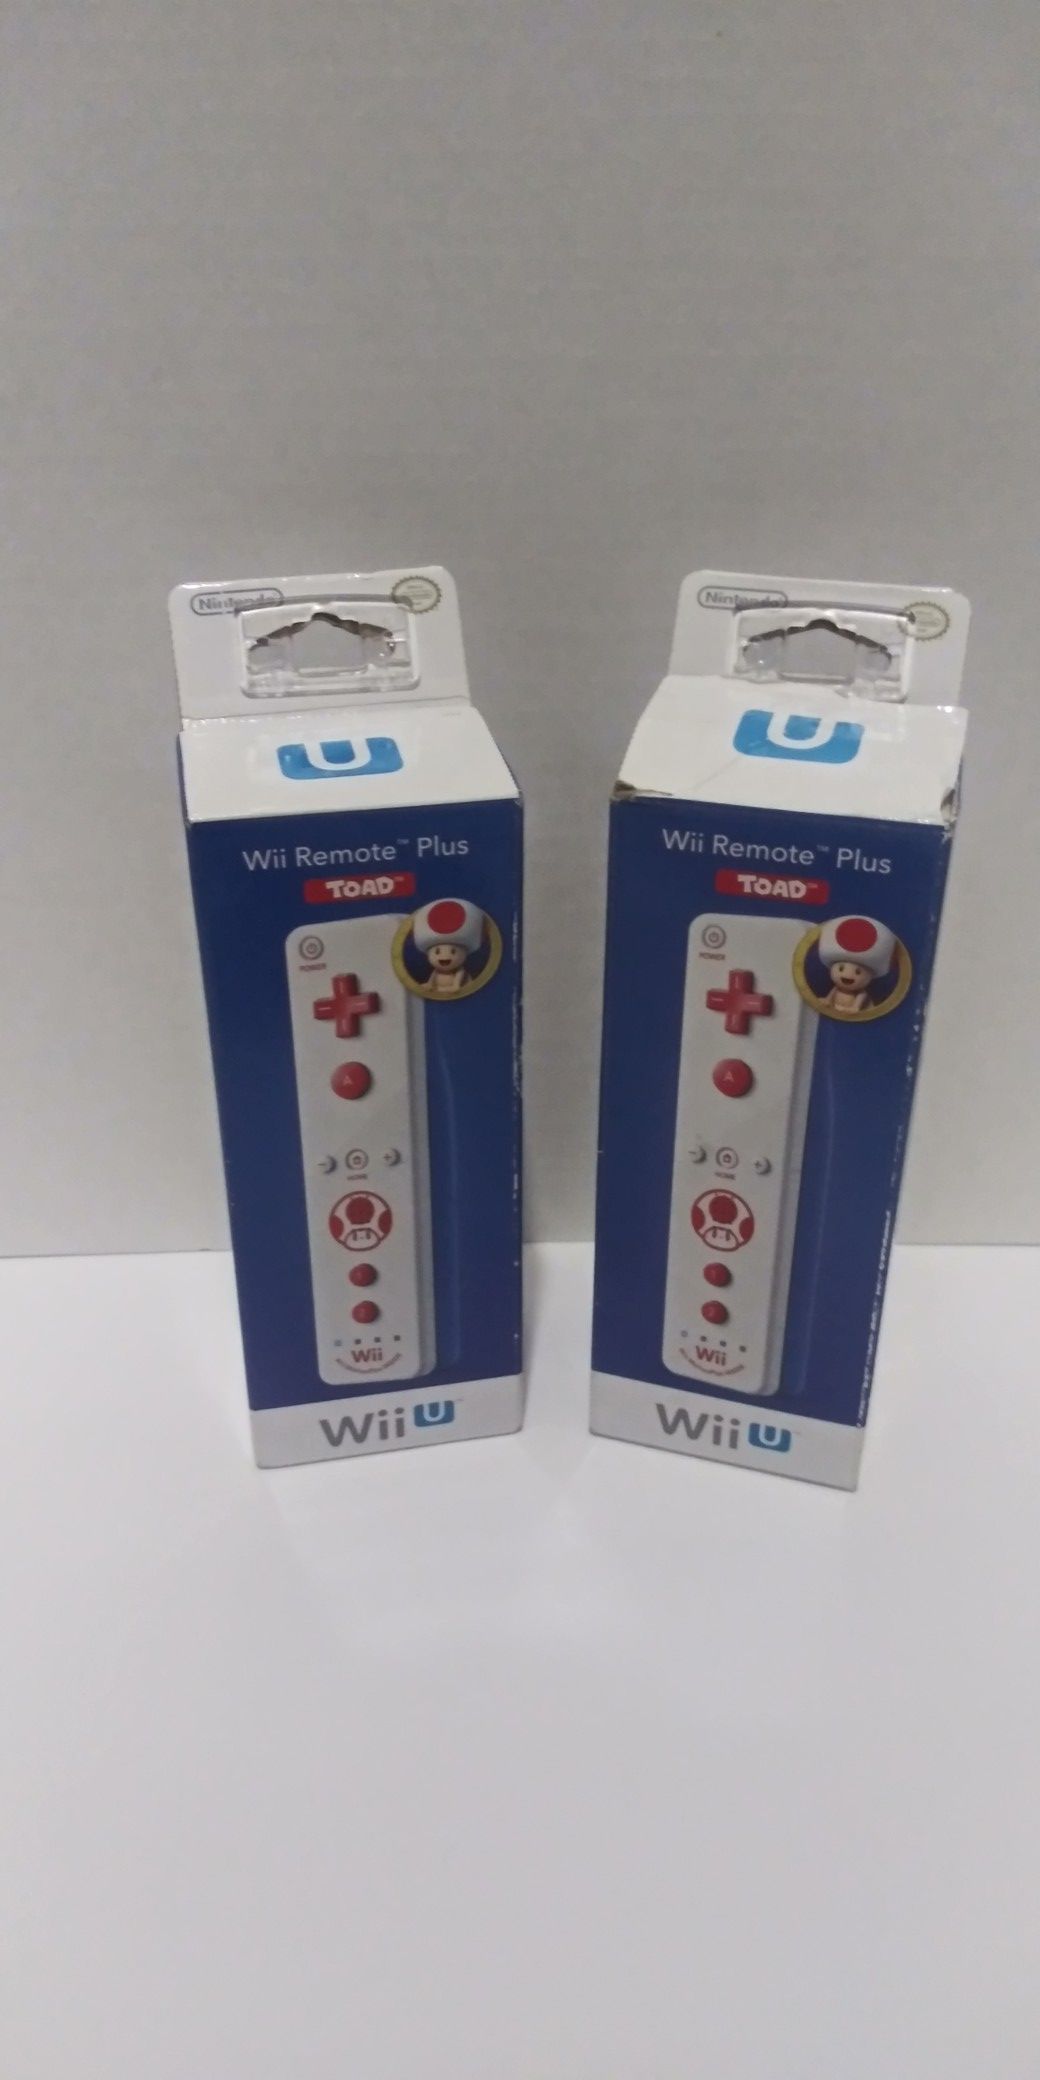 2 NIB Nintendo Wii Remote Plus Wii and Wii U